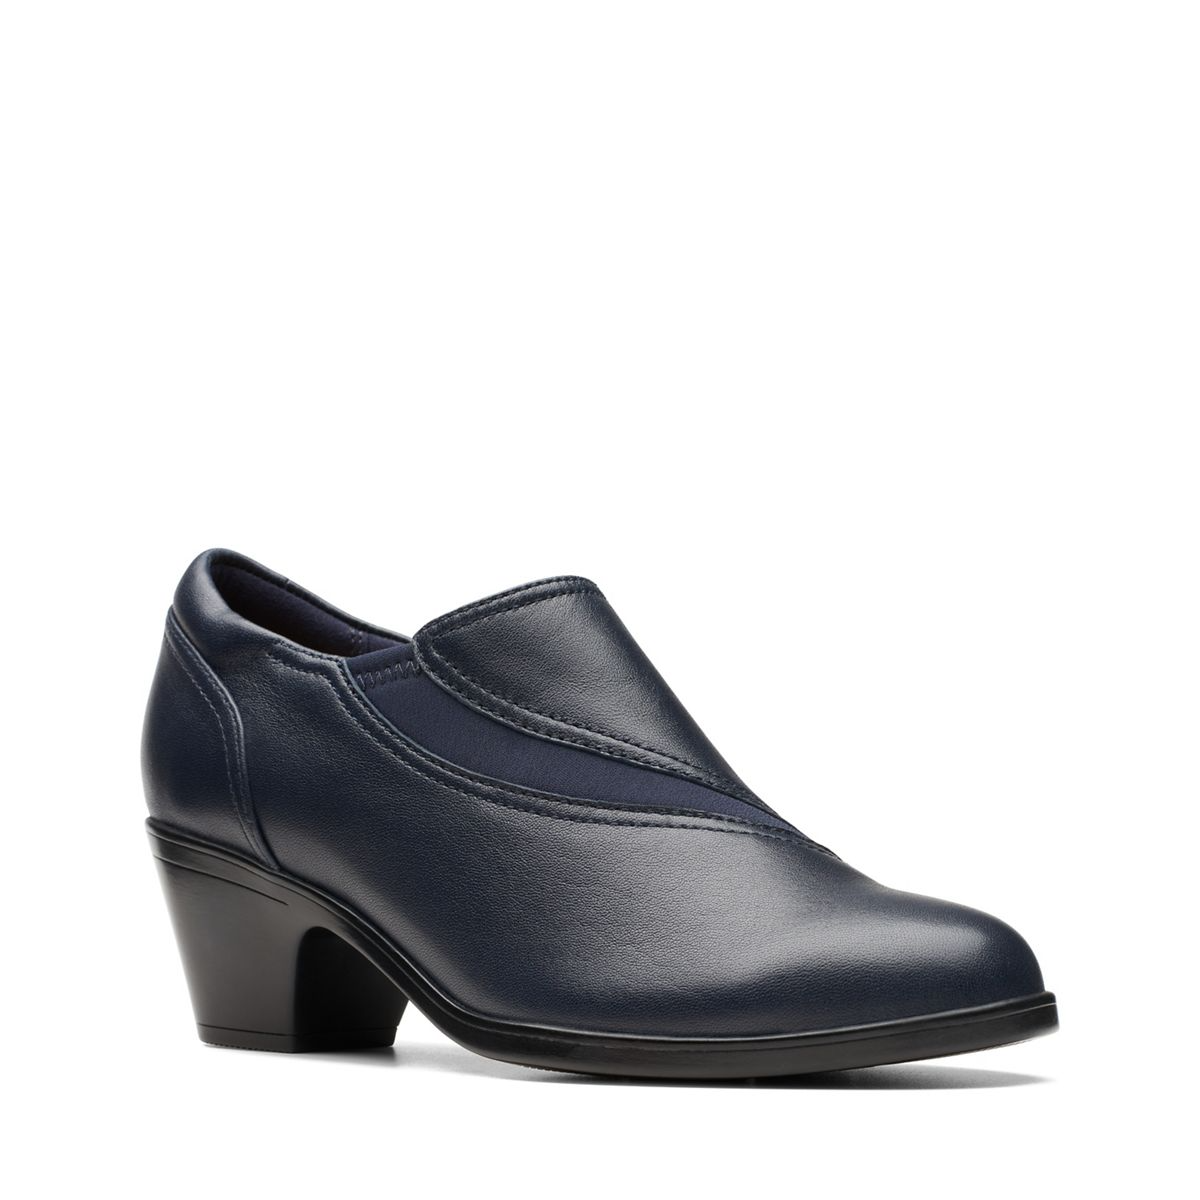 Clarks Emily2 Dove Leather Dress Shoe | Canadian Footwear